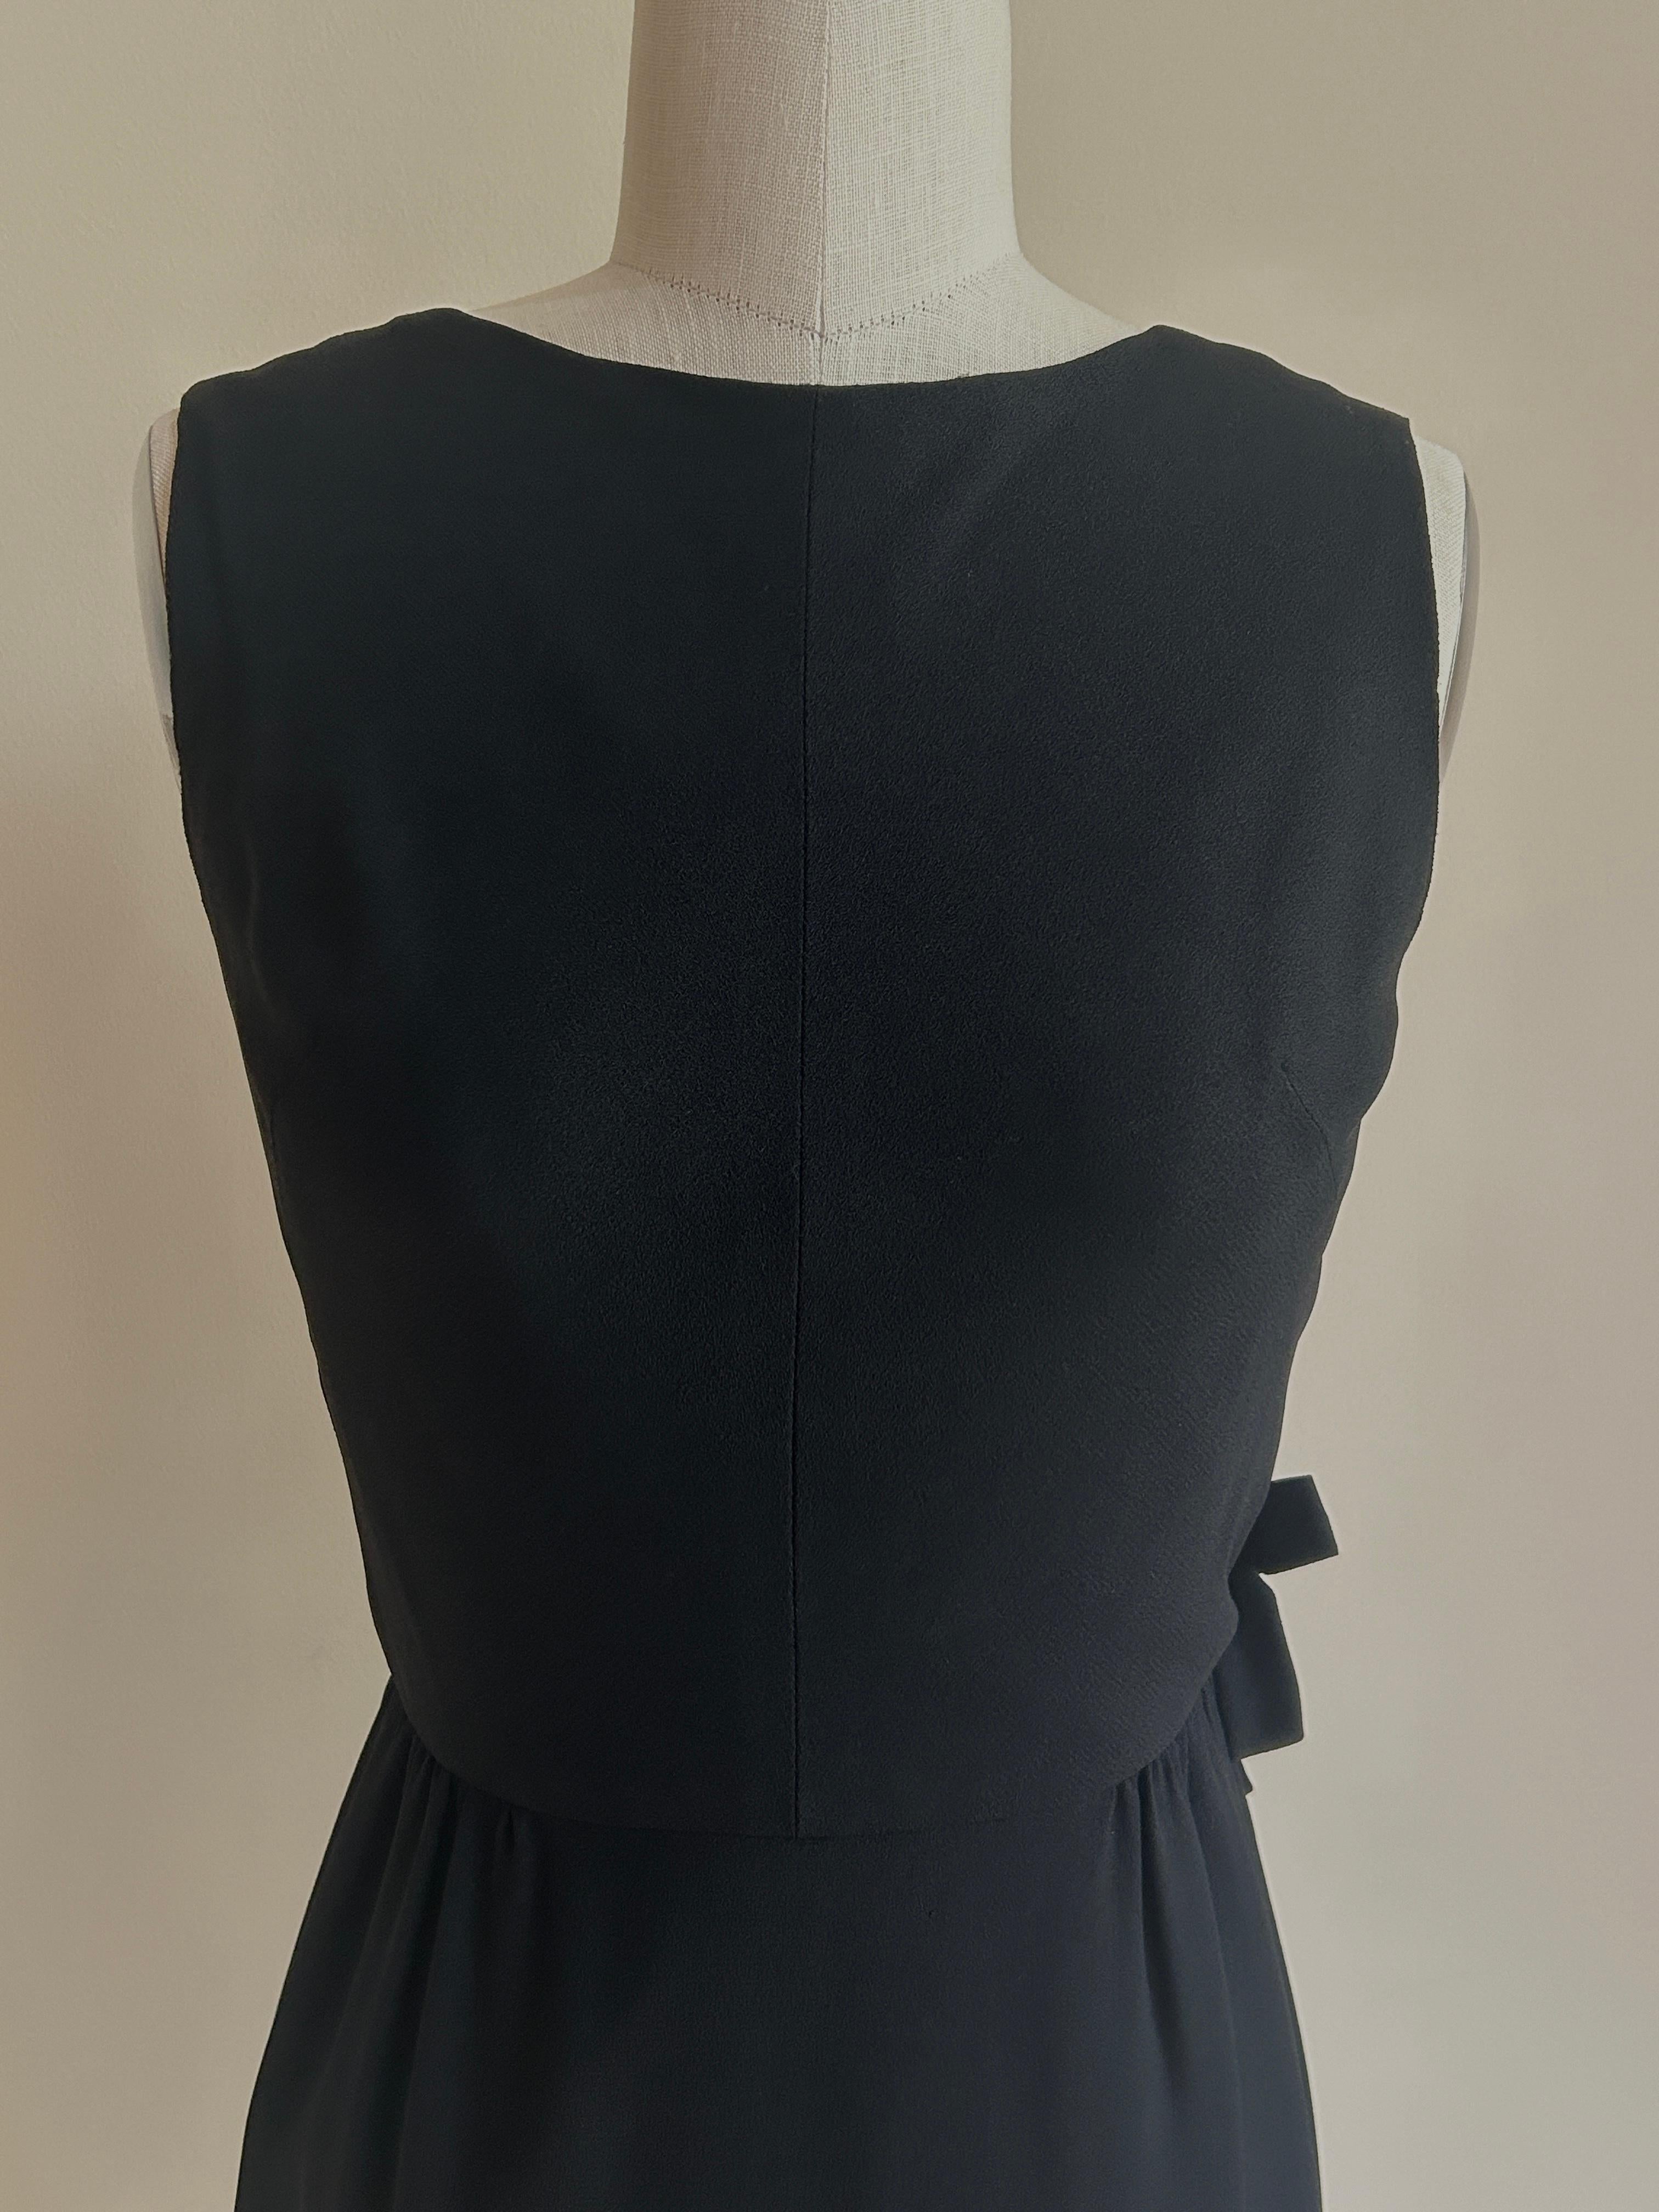 Women's 1960s Lanz Originals Button Back Little Black Dress from Bullocks of Wilshire For Sale